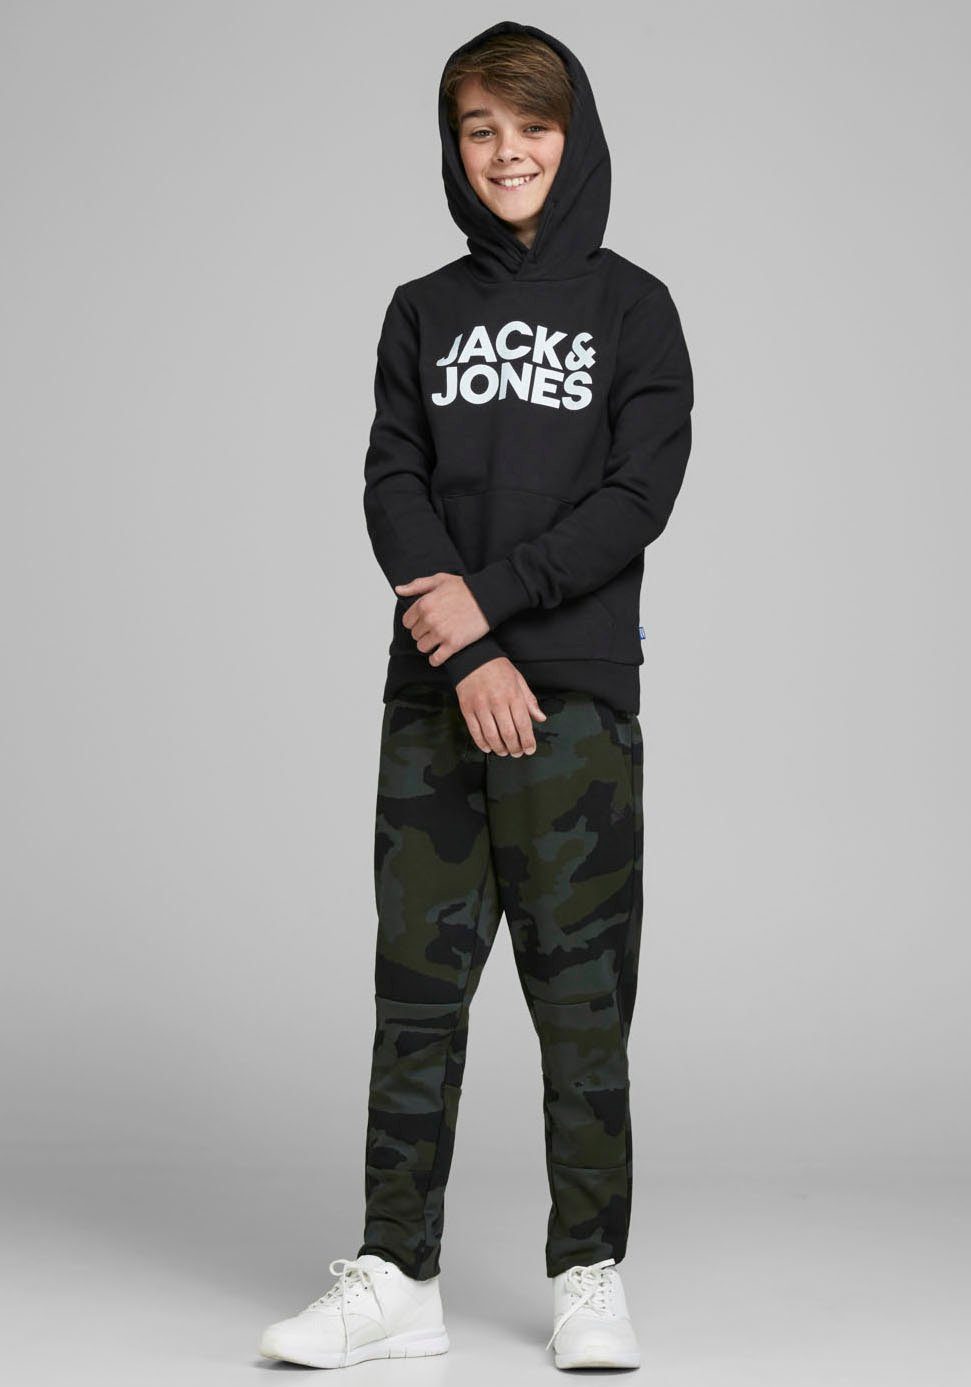 Jack & Jones Junior HOOD Kapuzensweatshirt JJECORP black/Large SWEAT LOGO Print